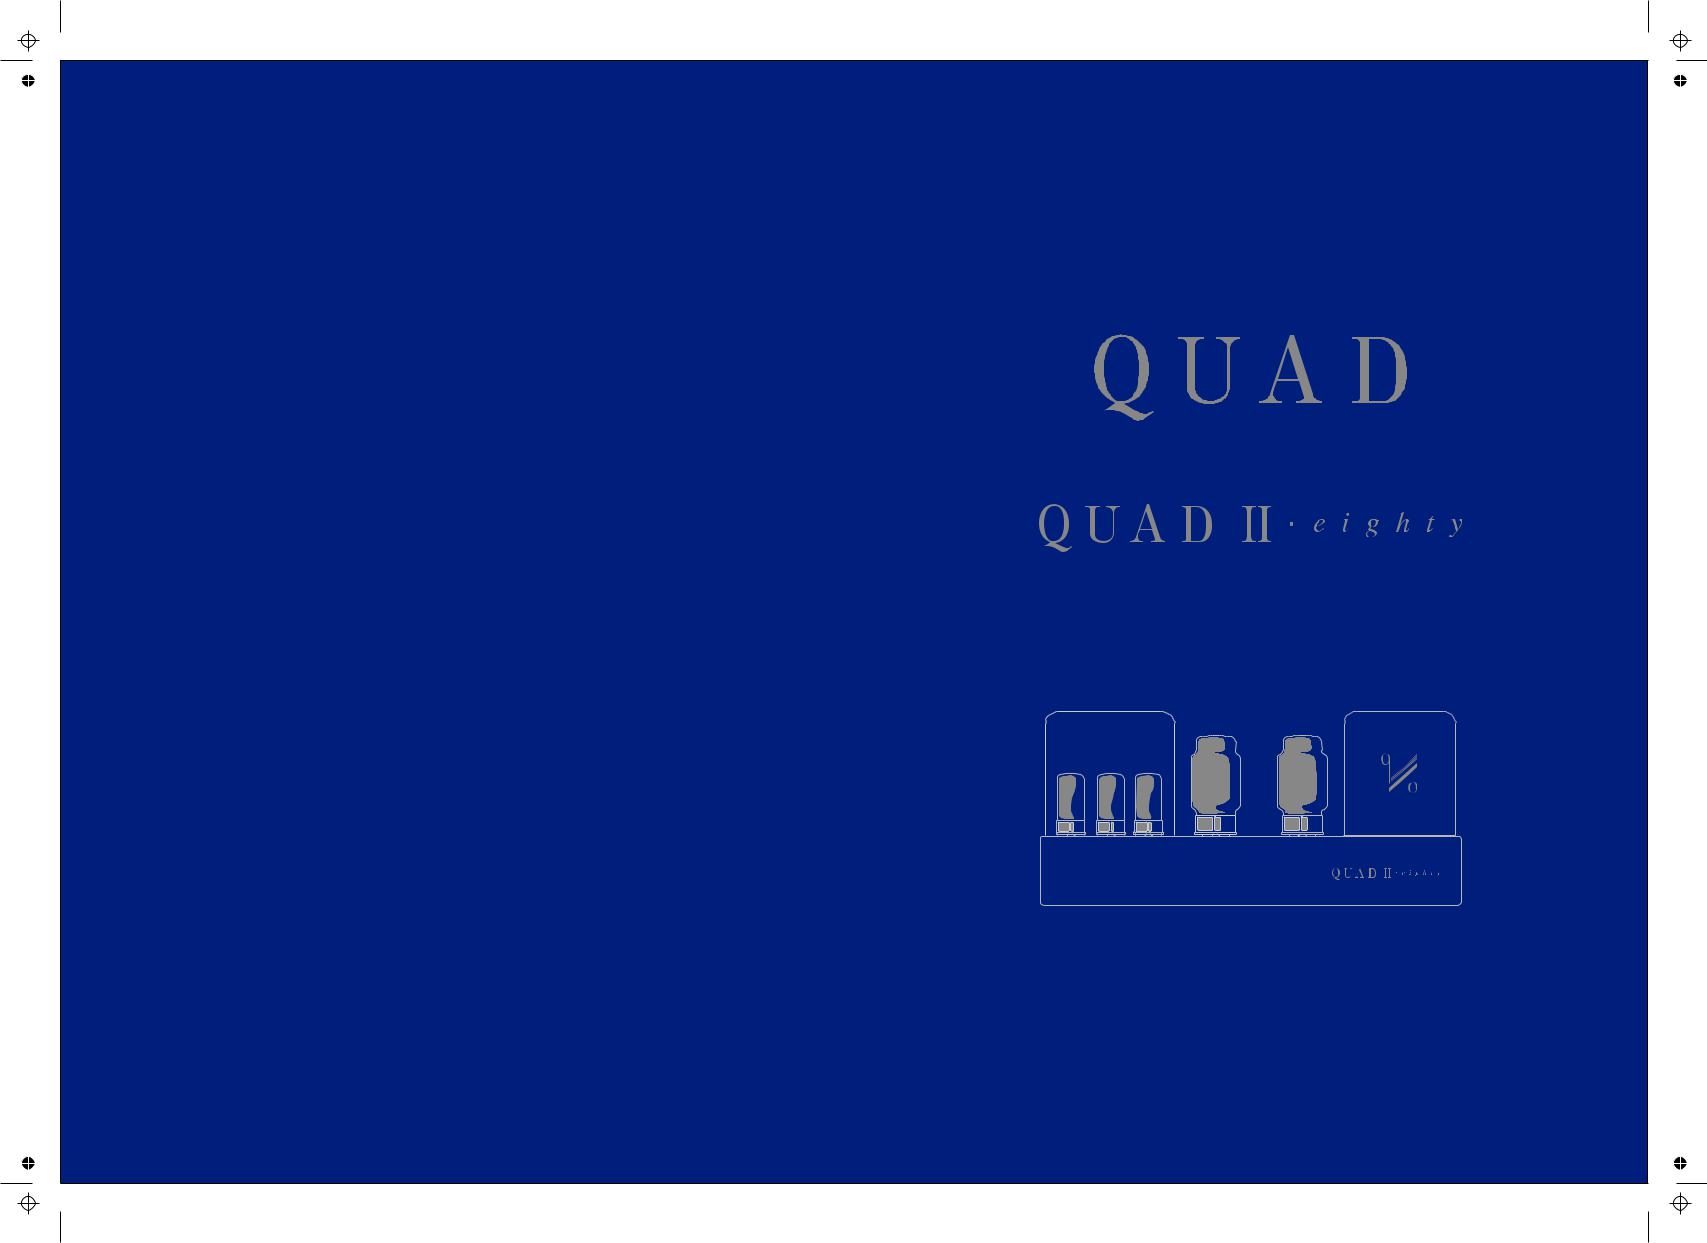 Quad II Eighty Owner's Manual